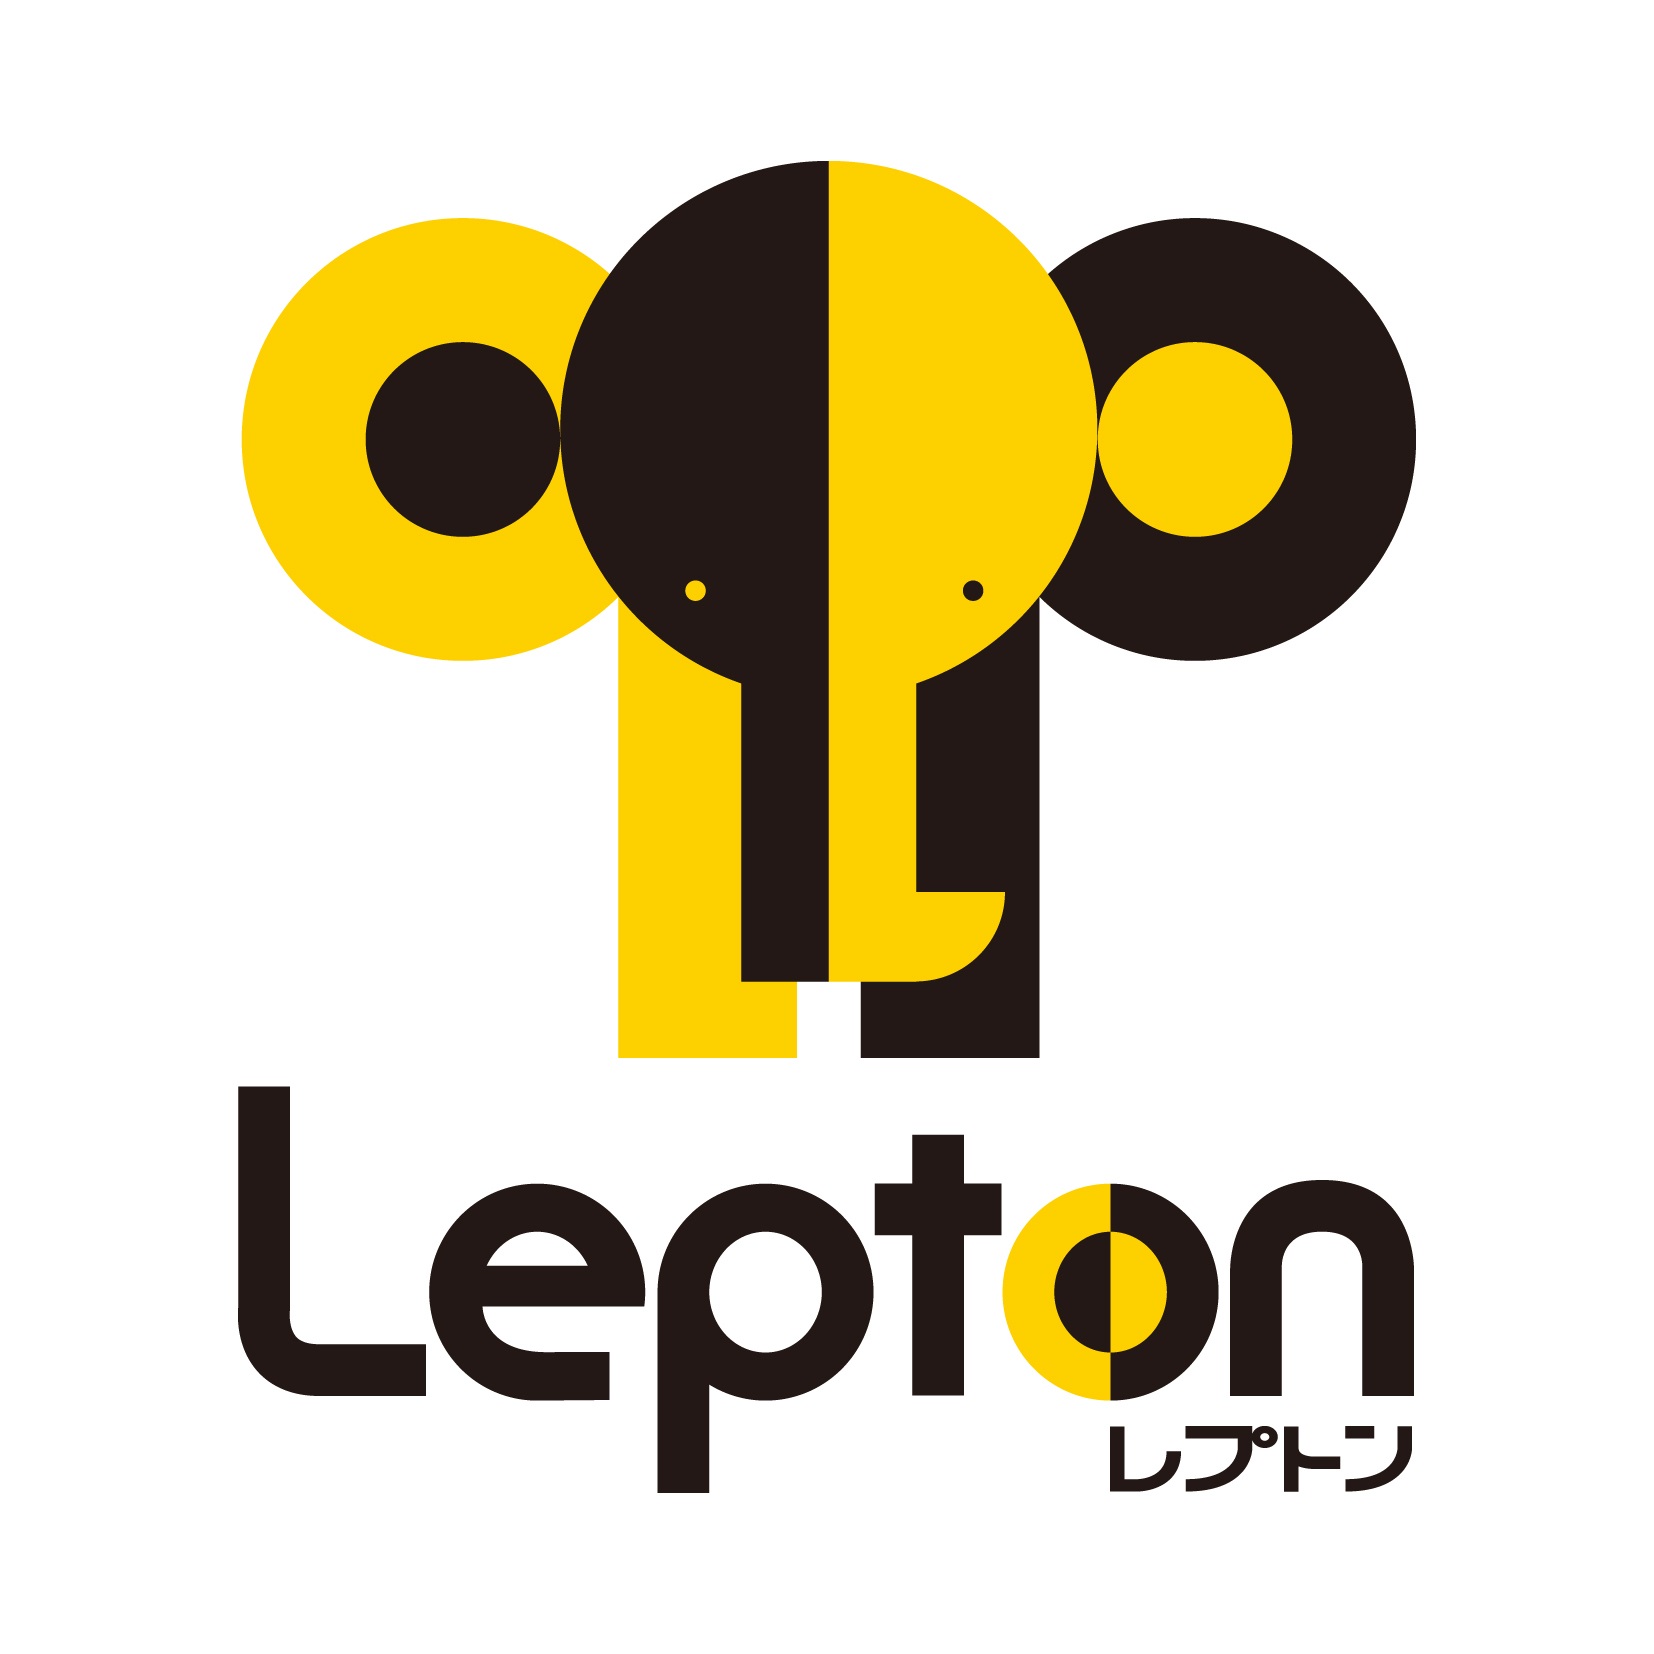 s-Live Lepton東京つつじヶ丘校